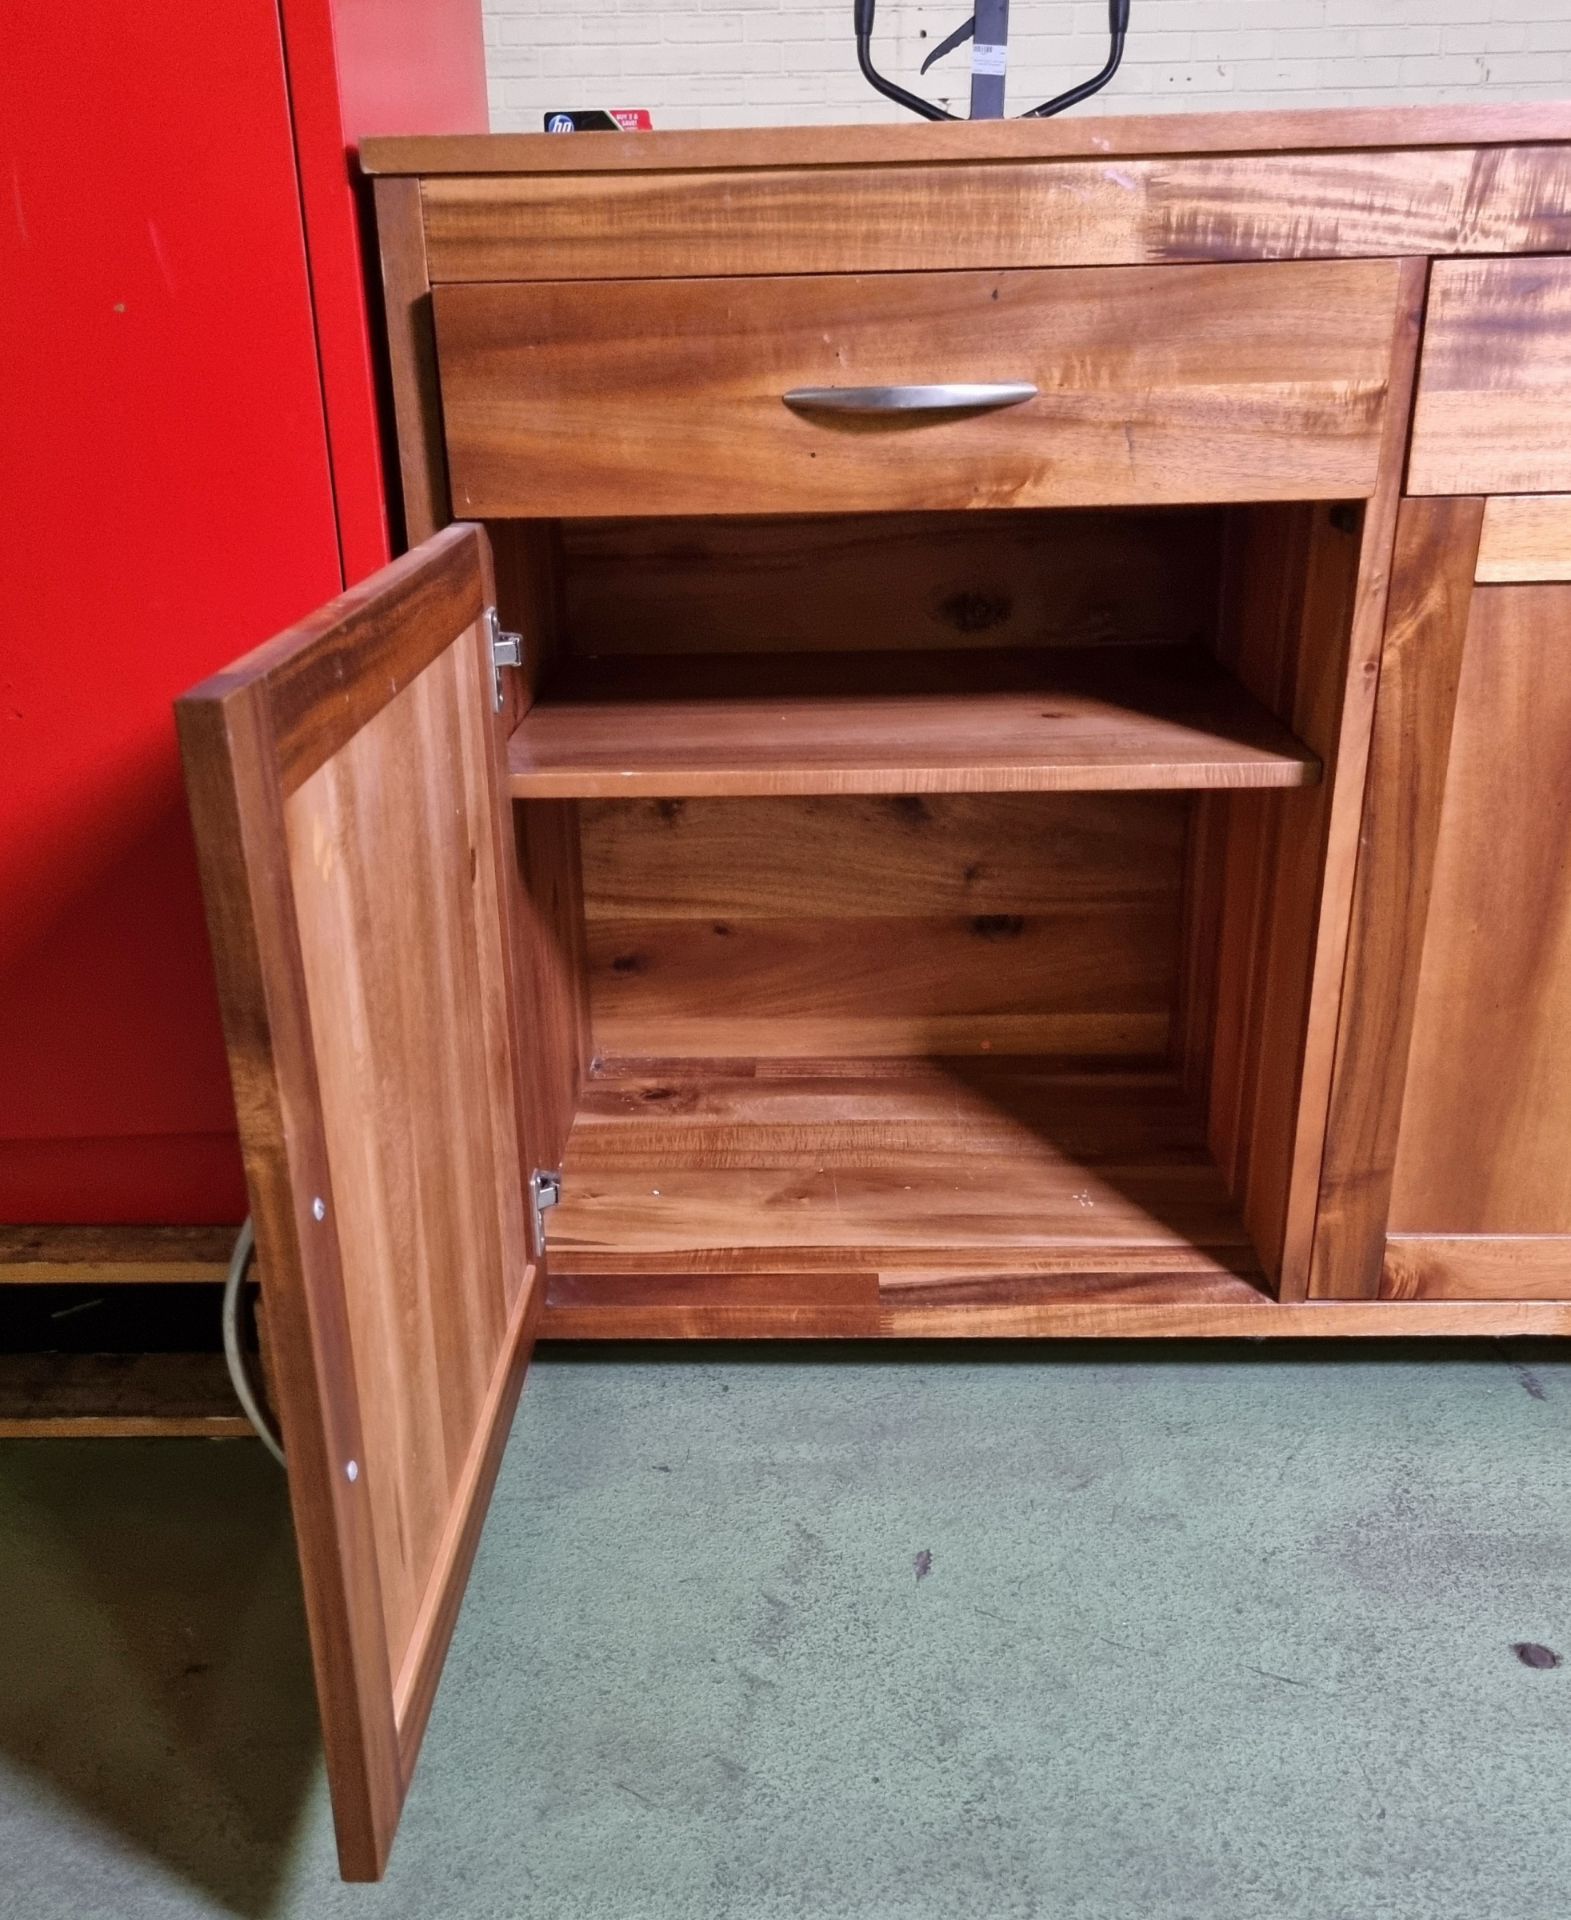 3 door 3 drawer wooden cabinet - W 1750 x D 500 x H 840mm - IN NEED OF REPAIR - Image 7 of 7